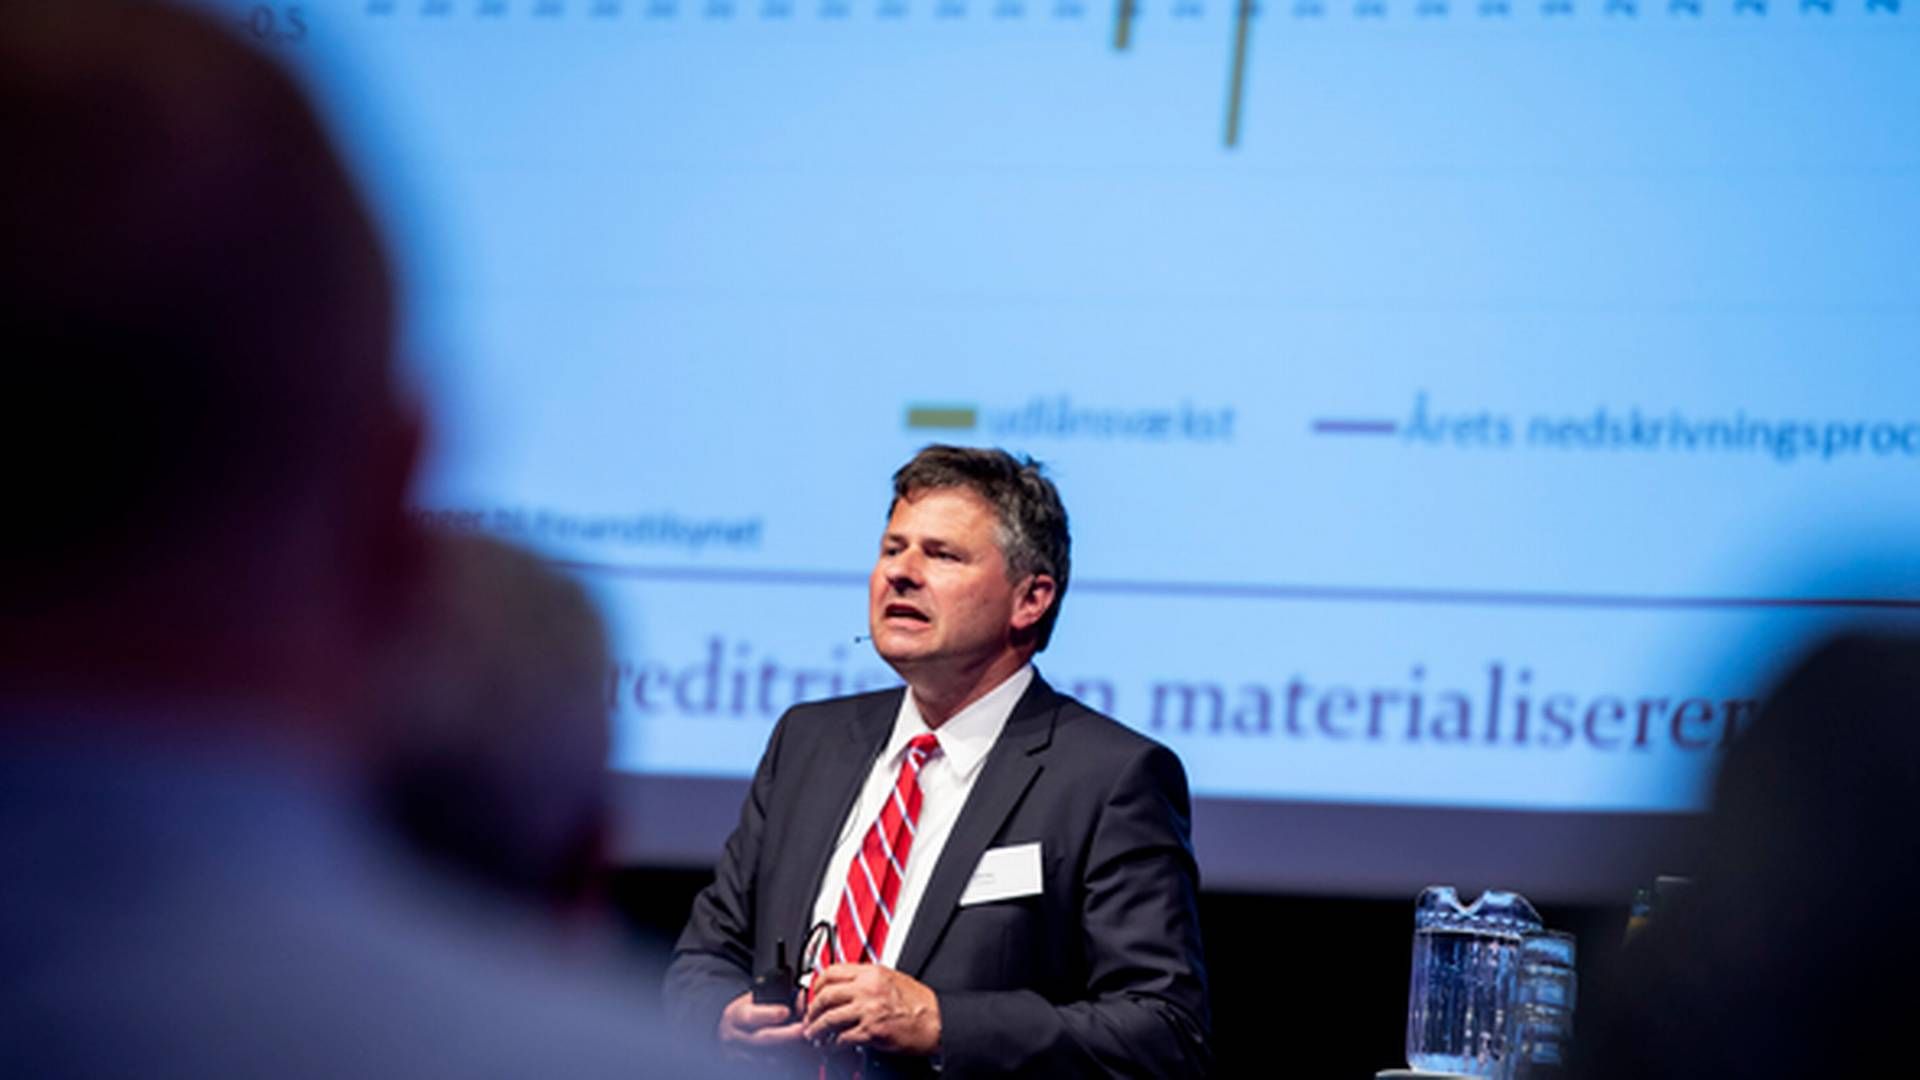 Finanstilsynets adm. direktør Jesper Berg ved Lopi-årsmødet i Aalborg, 2018 | Foto: René Schütze